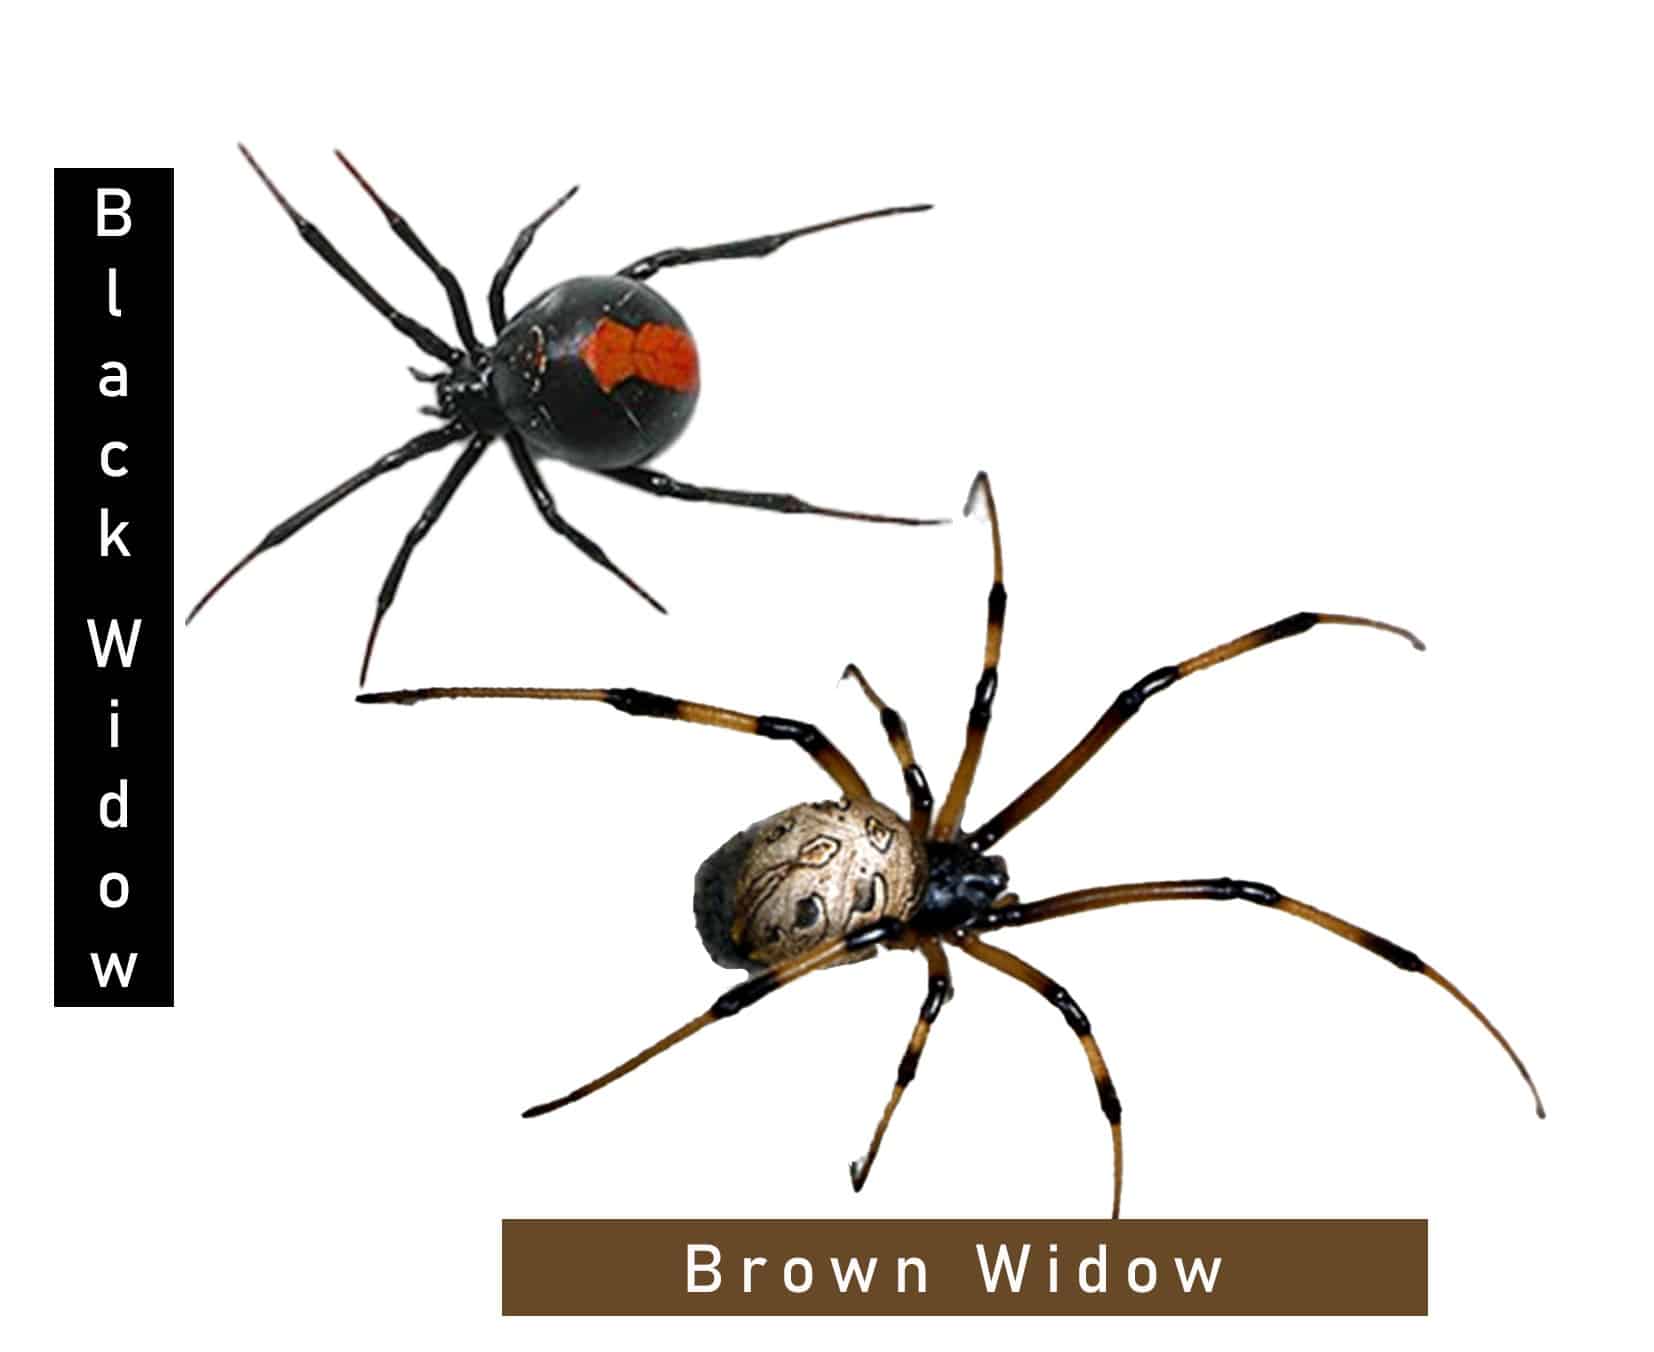 brown black widow bites